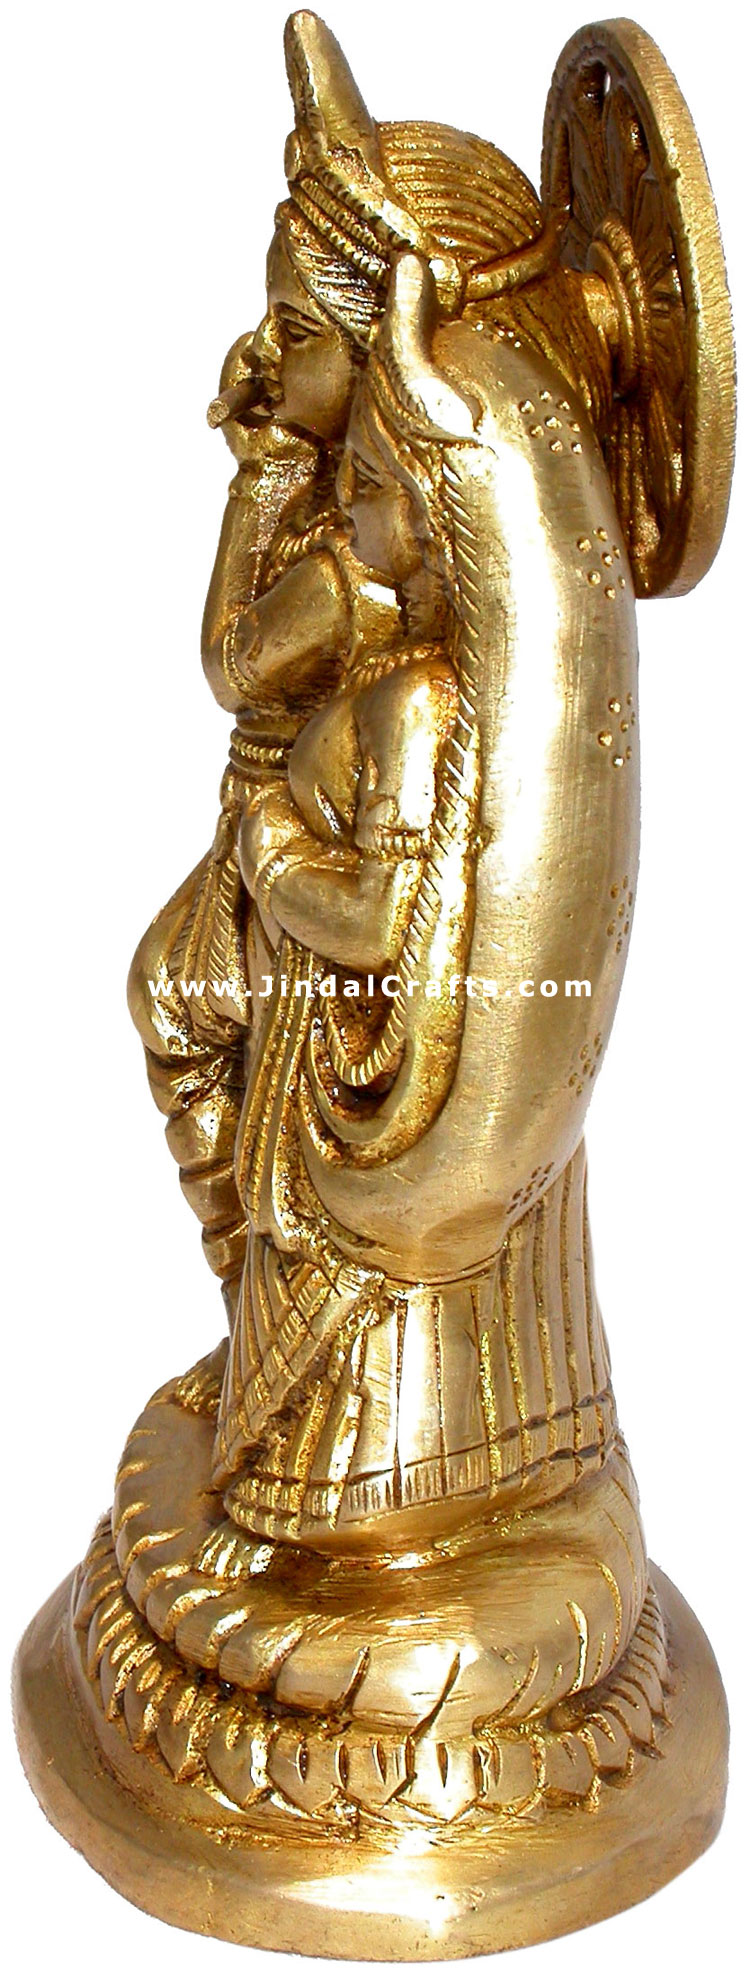 Radha Krishna - Brass made Indian God Goddess Statue Figurine Handicrafts Statue